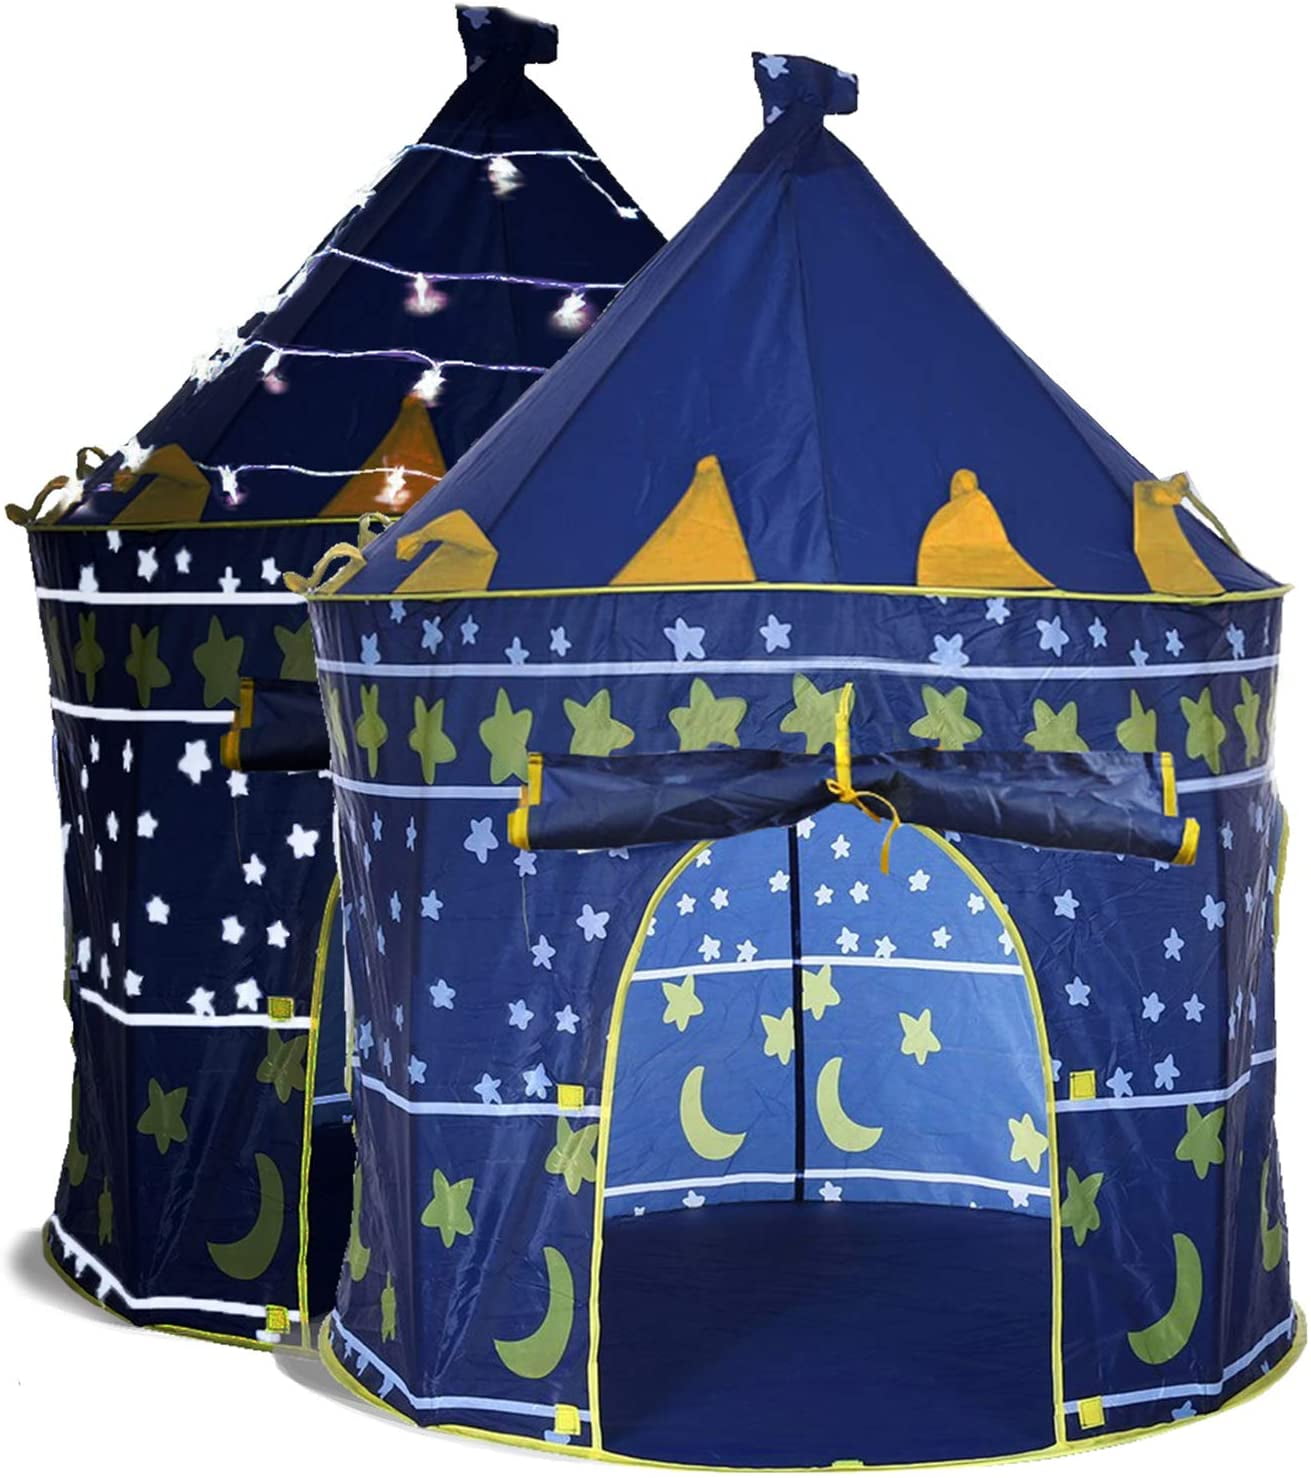 Kids Play Tent Castle Cubby House Indoor Outdoor Game Children Birthday Gift 